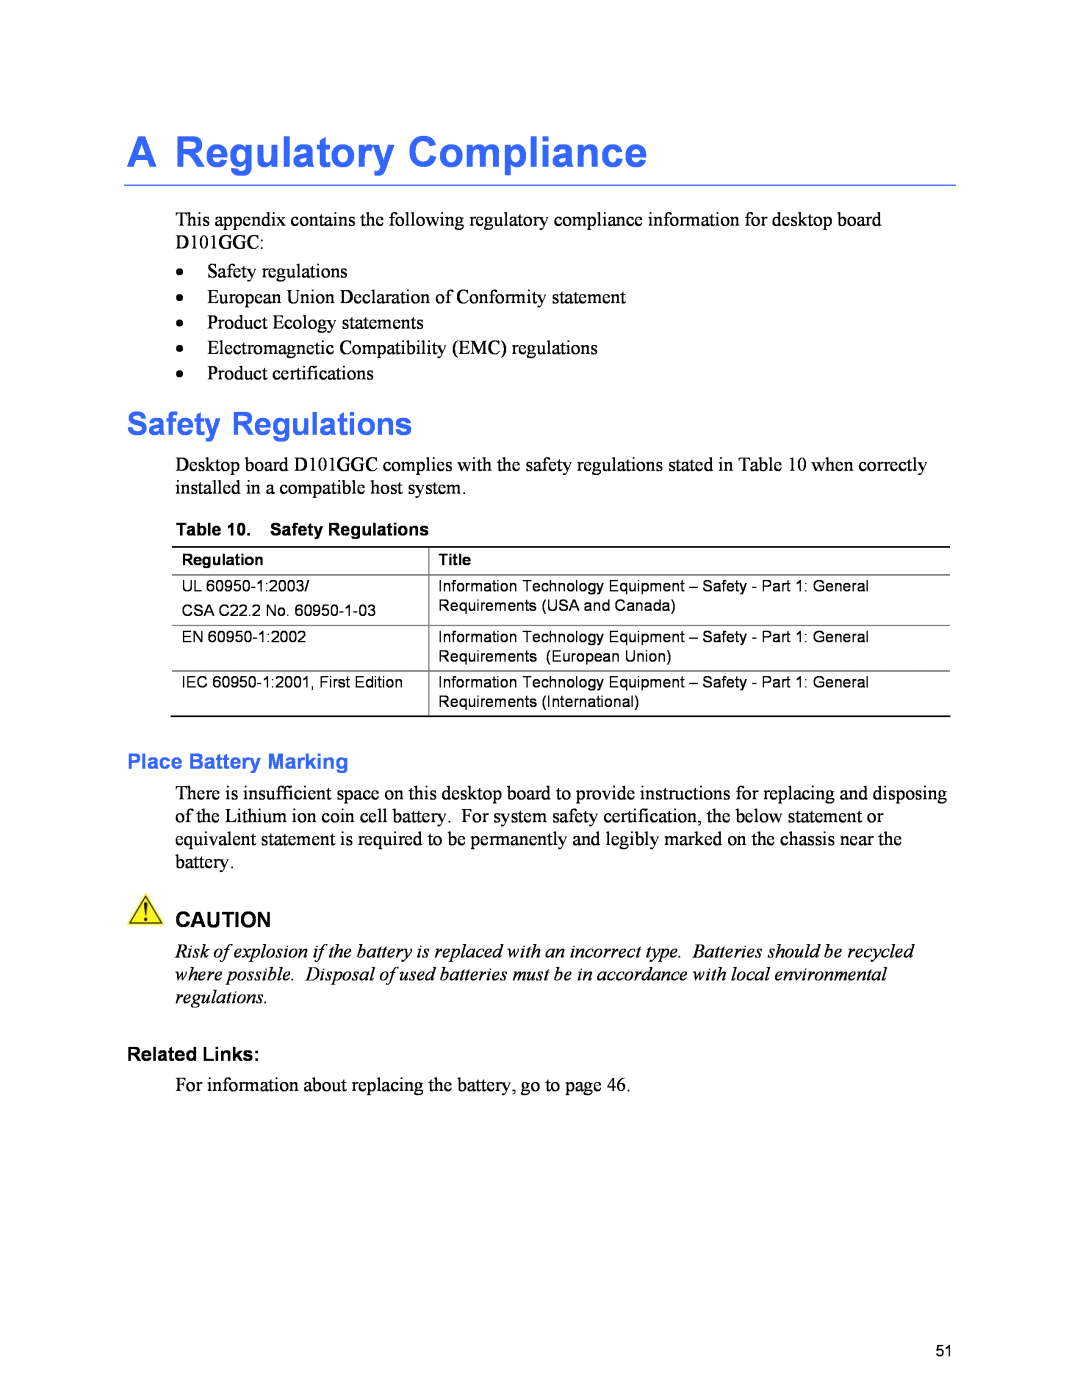 Intel D101GGC manual A Regulatory Compliance, Safety Regulations, Place Battery Marking, Related Links 